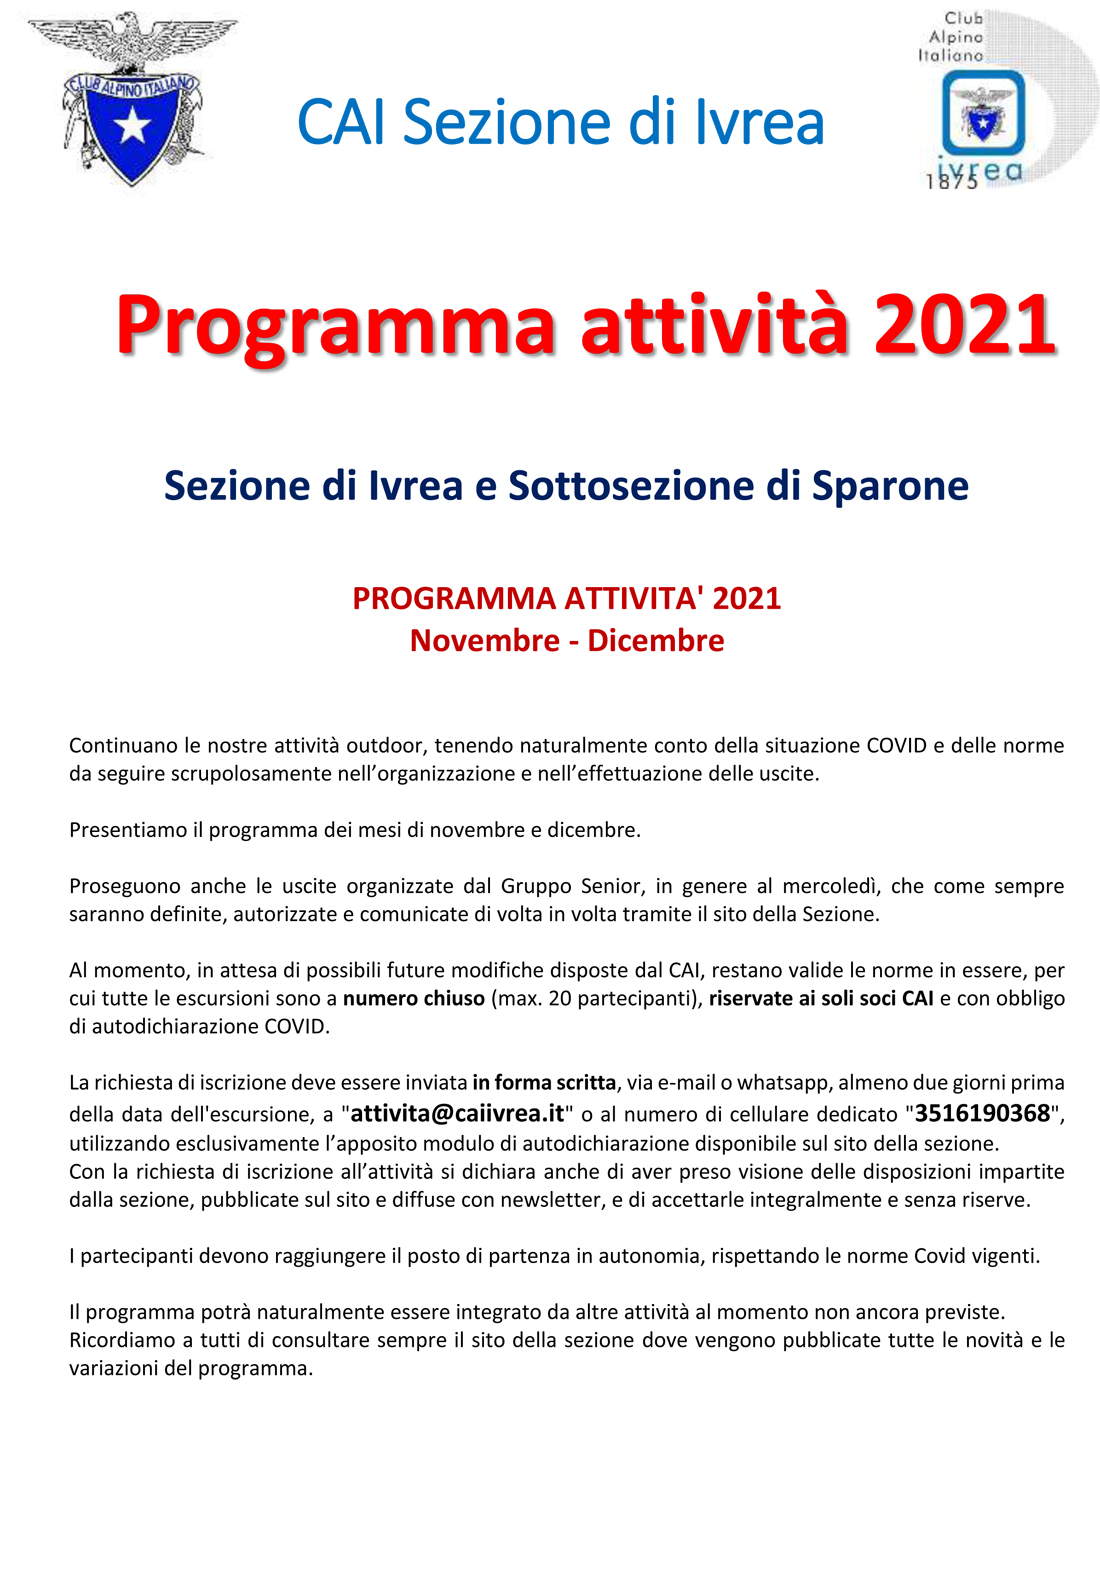 20211027_CAI_Ivrea_-Programma_2021_novembre_-_dicembre-1.jpg